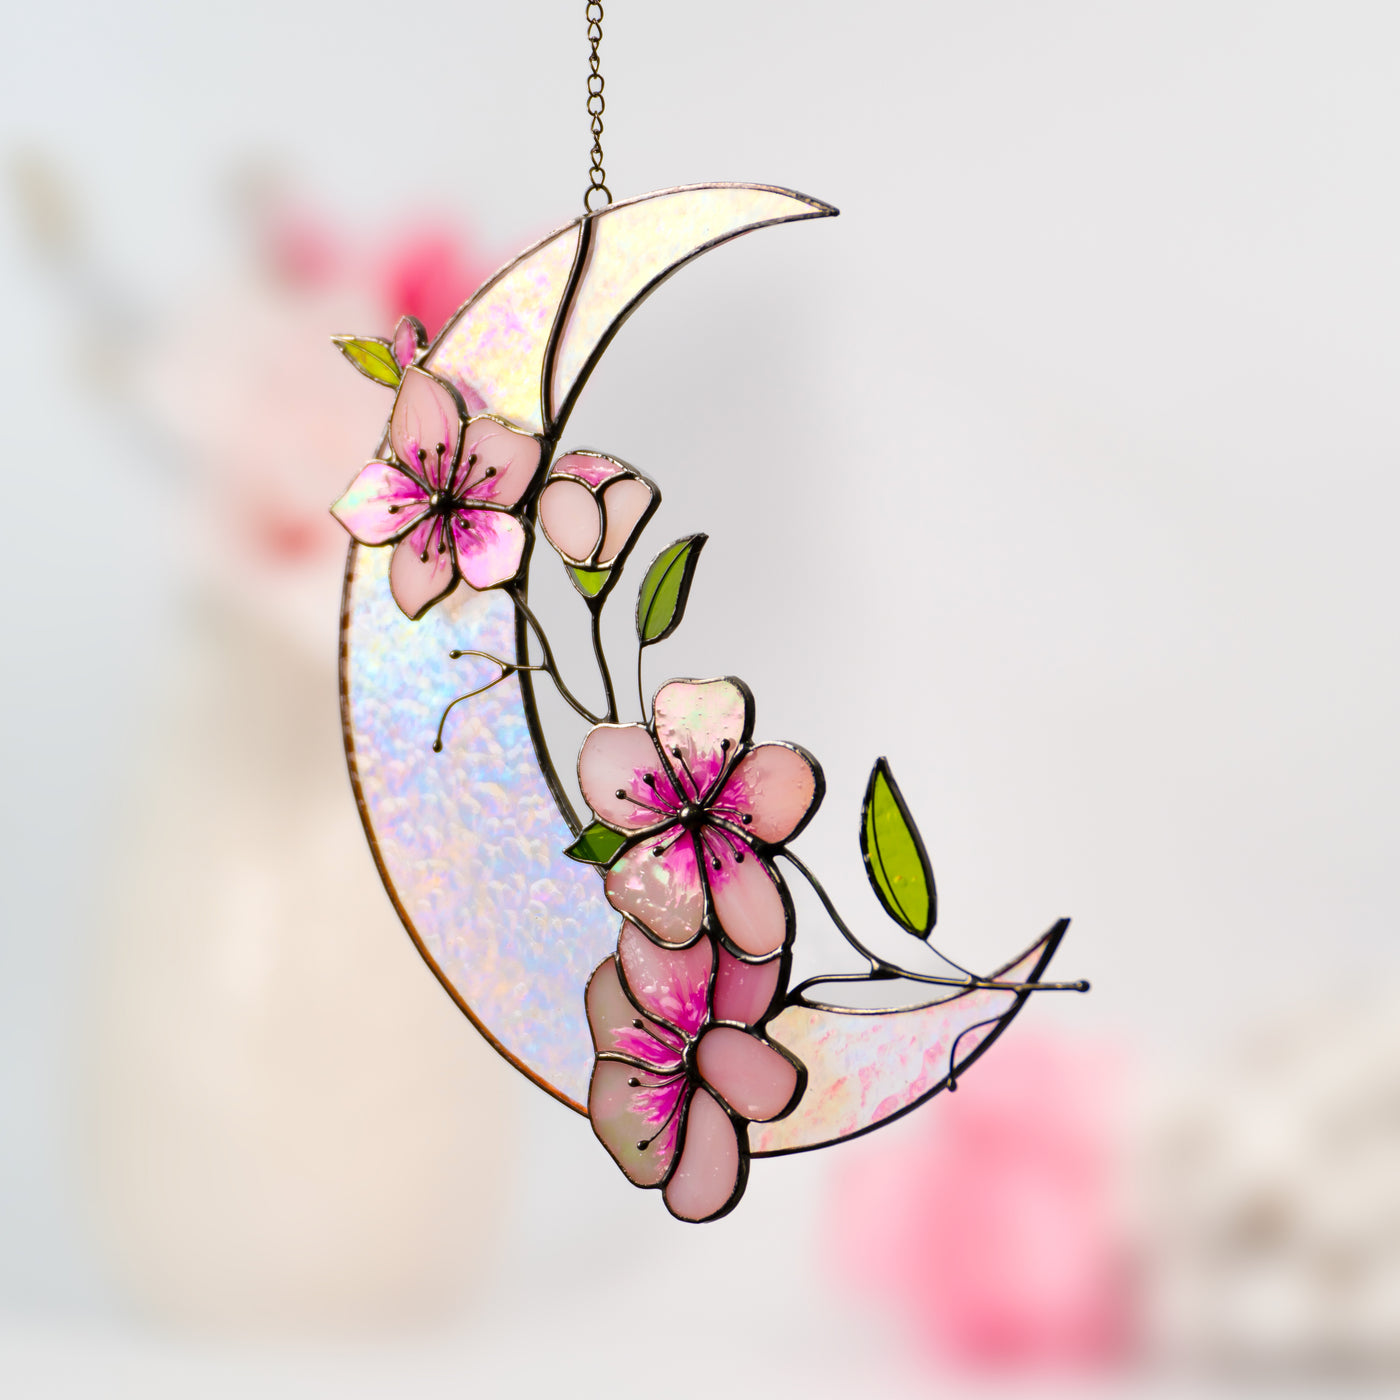 Stained glass moon and sakura suncatcher zoomed